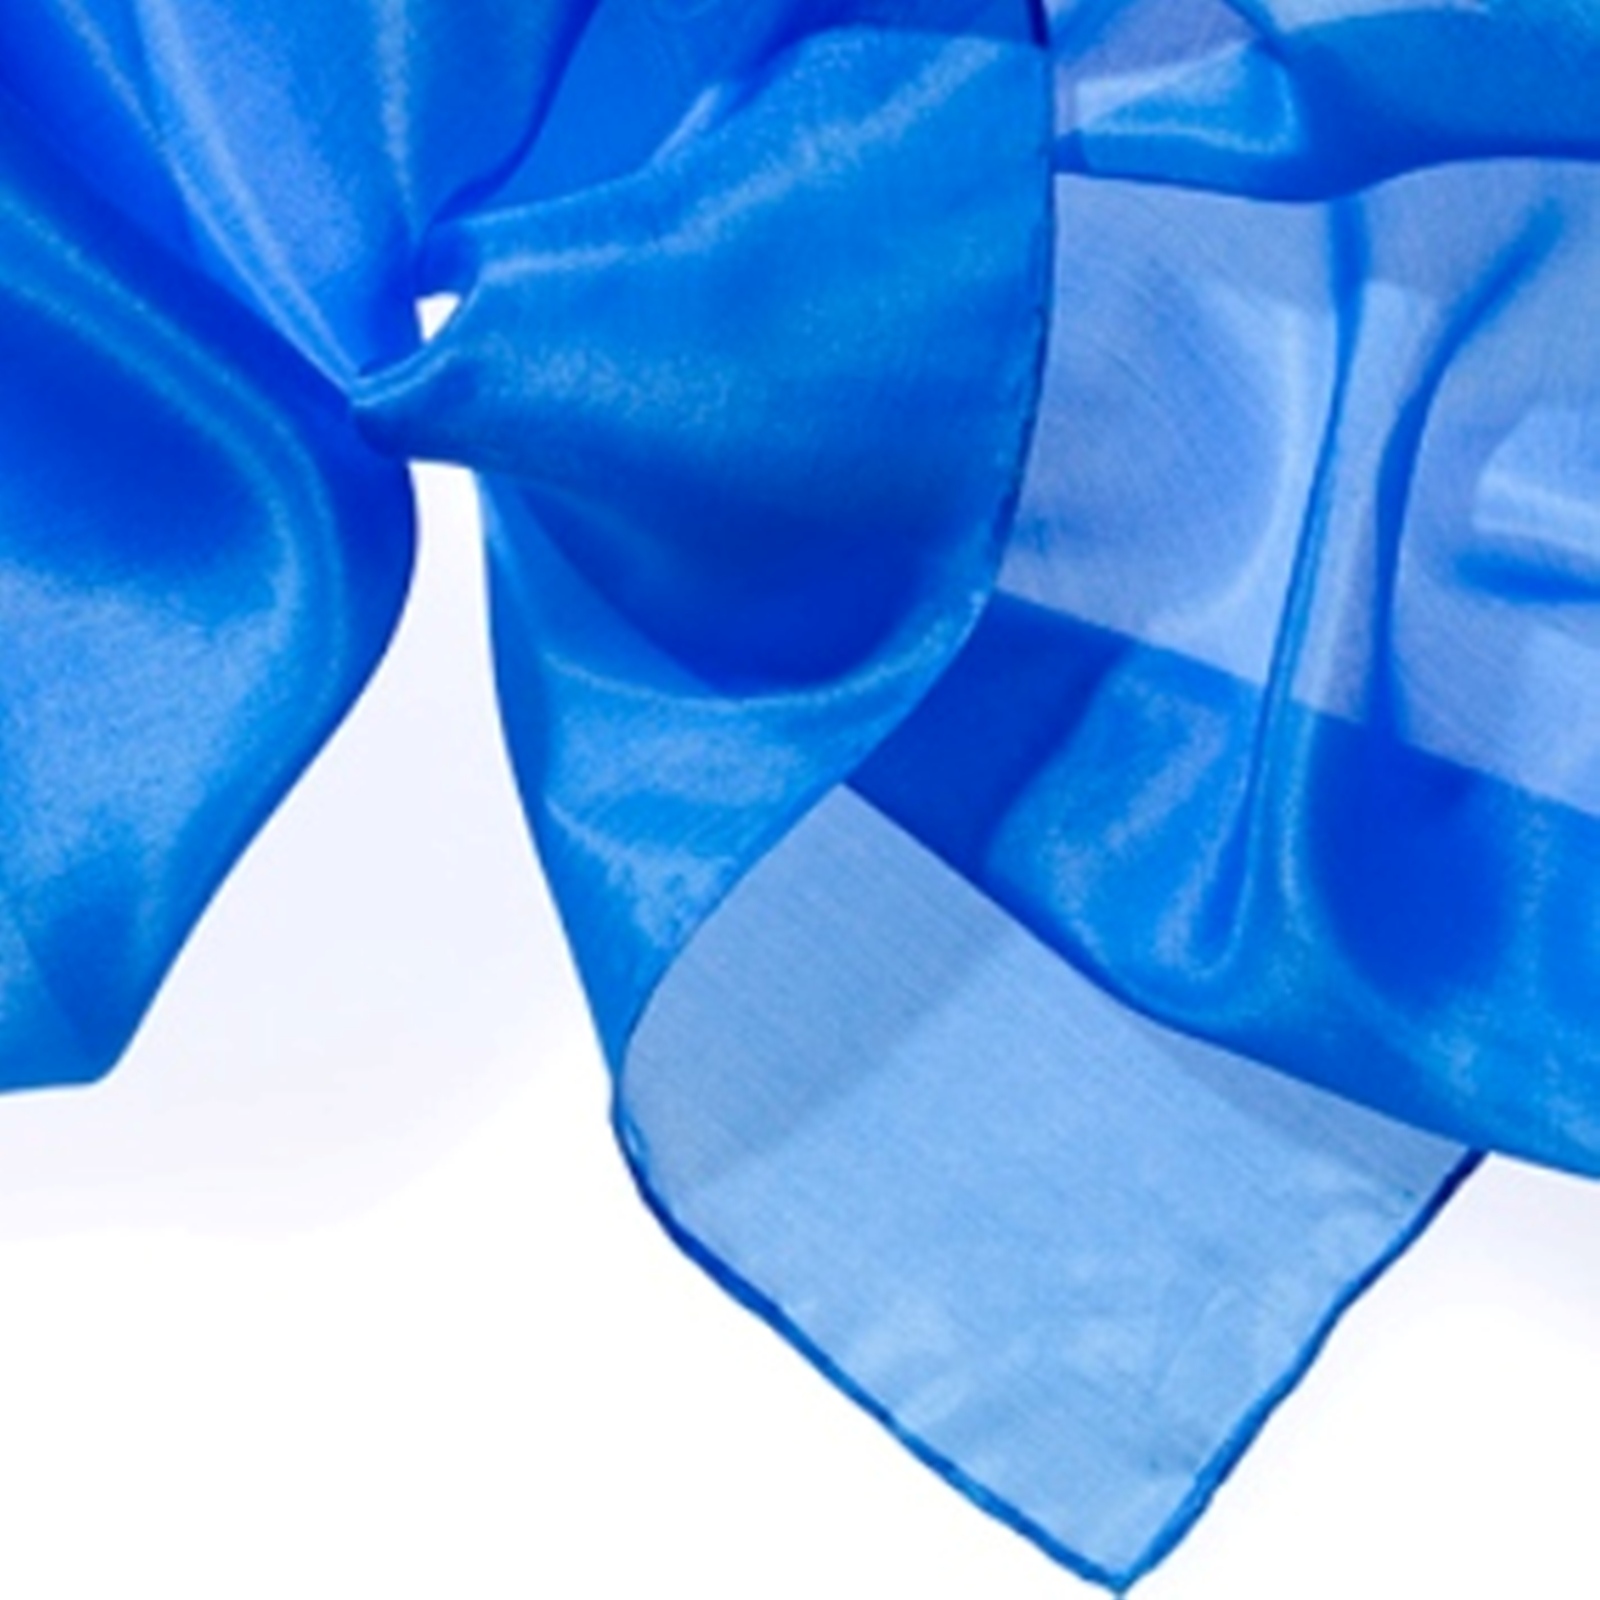 Seidentuch Nickituch 100 % Seide brillant blau 55 x 55 cm